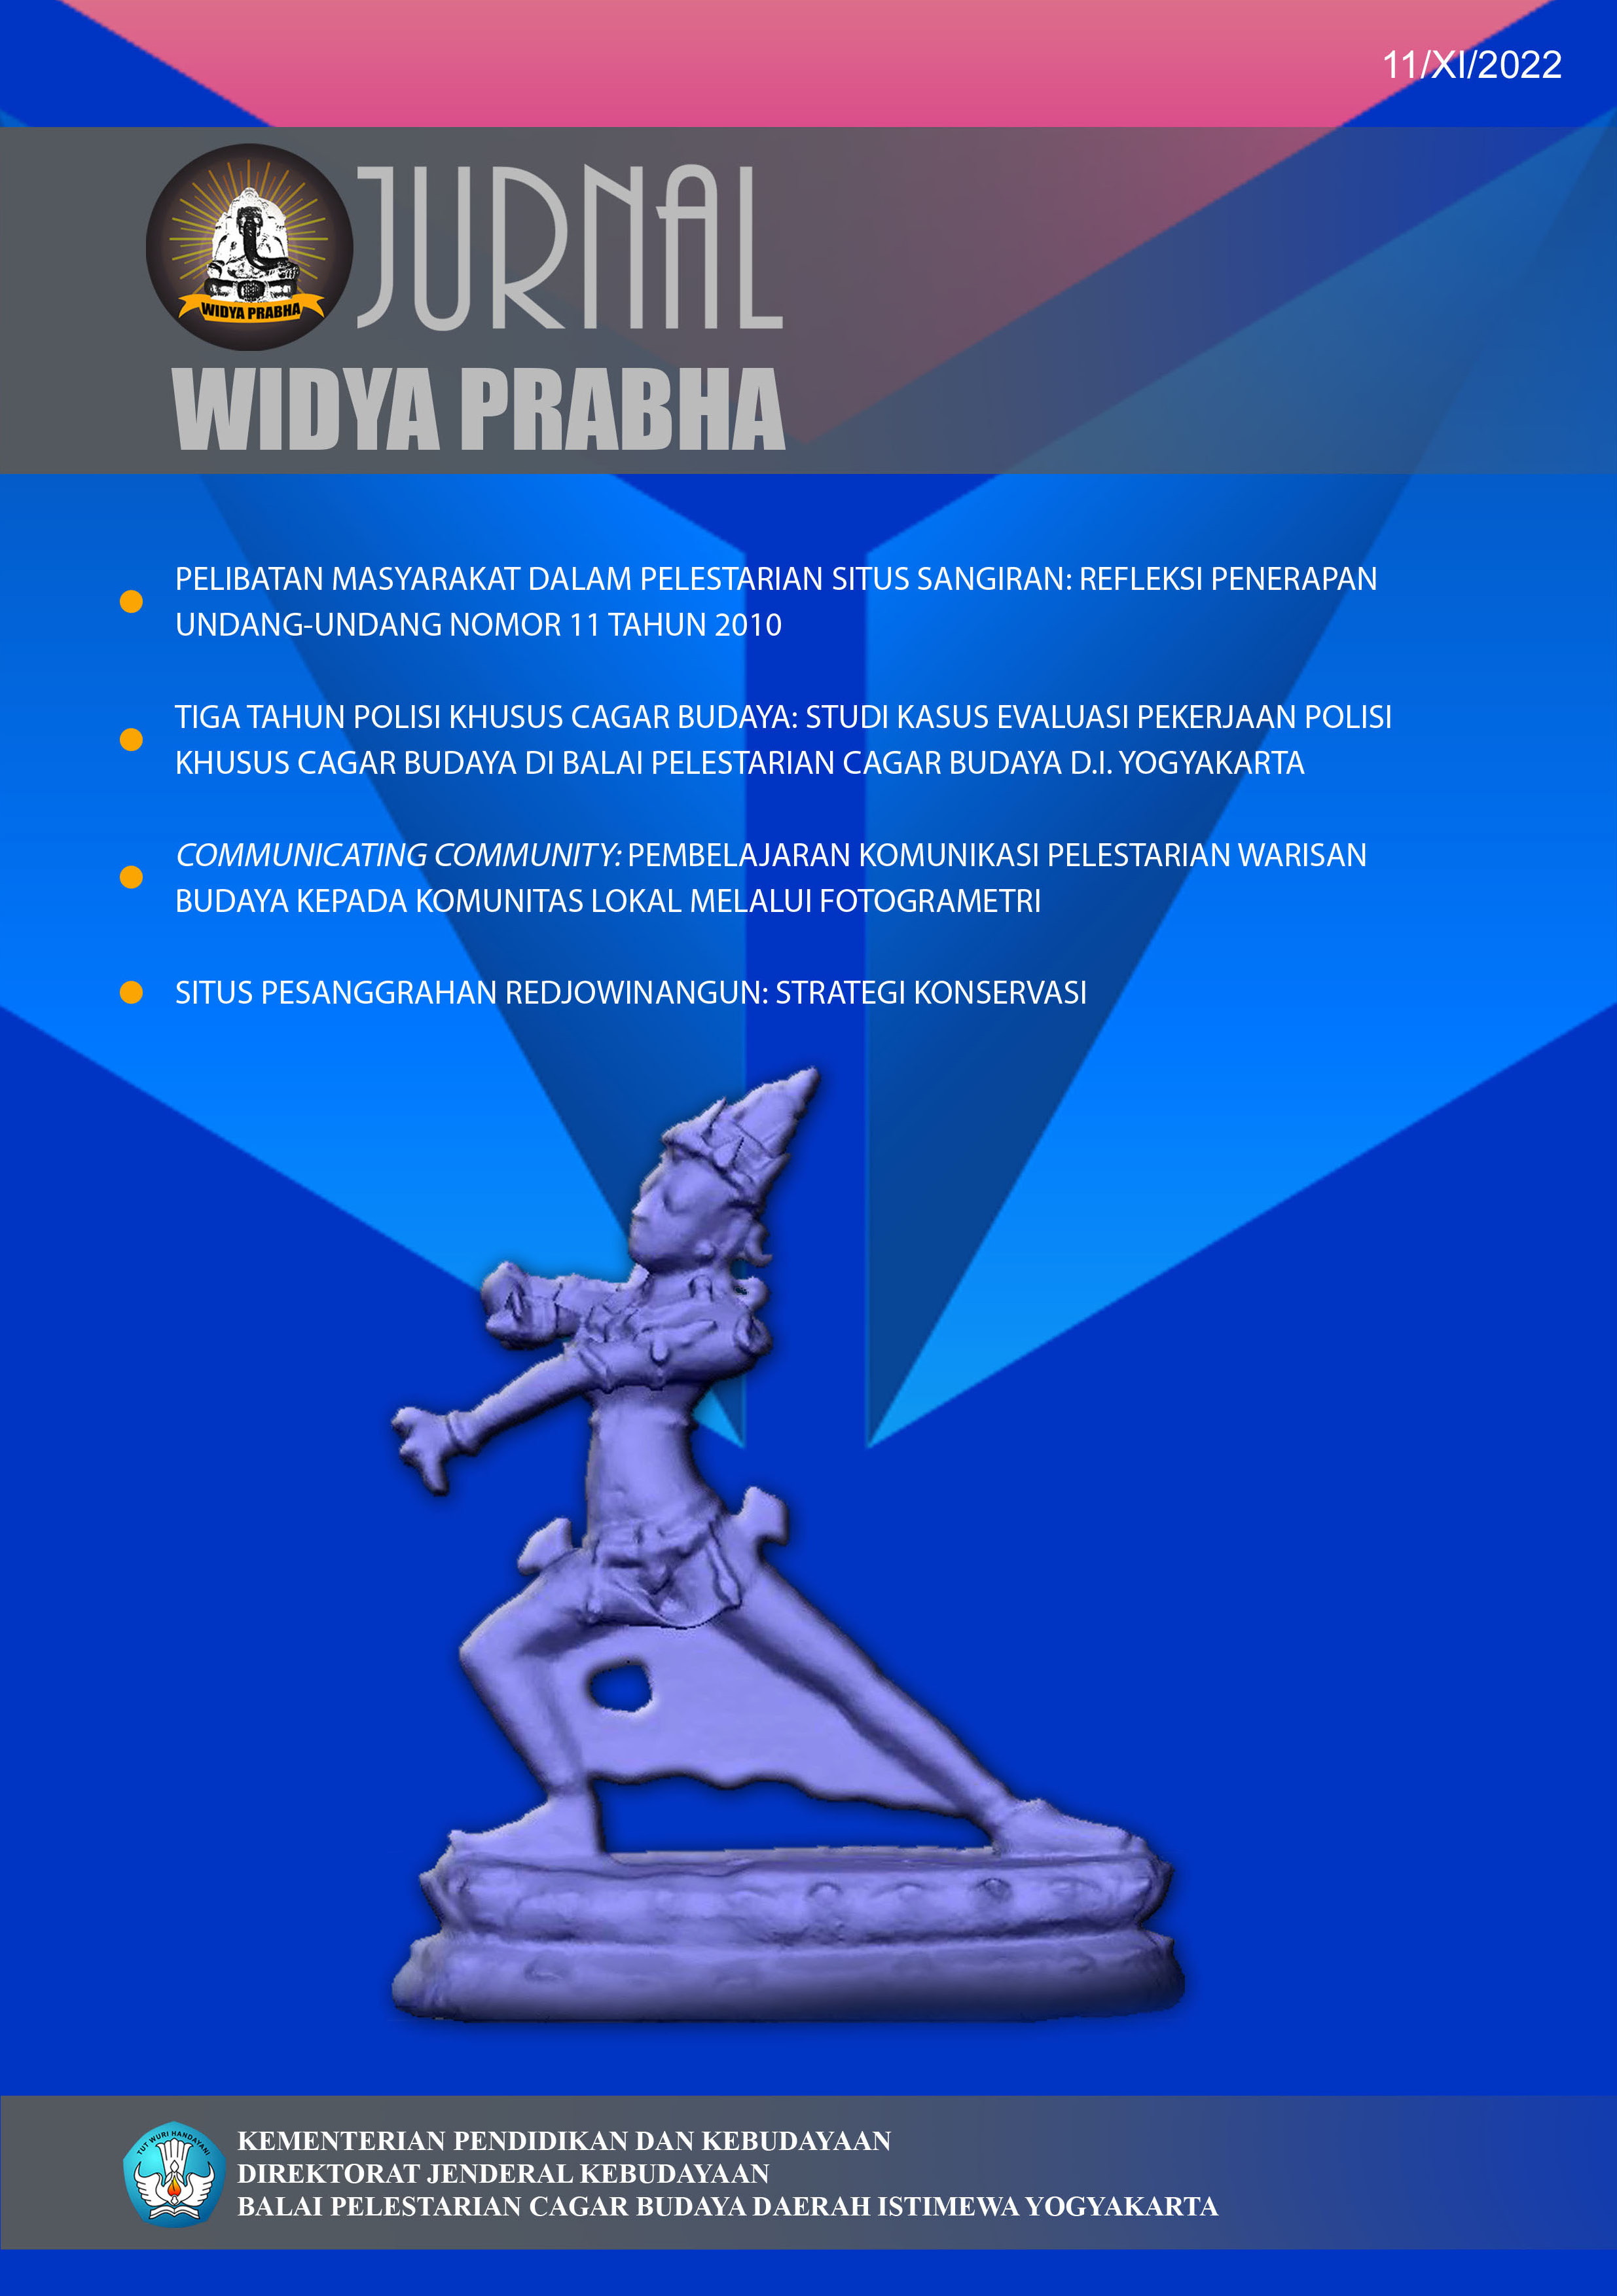 Read more about the article Jurnal Widya Prabha No.11/XI/2022